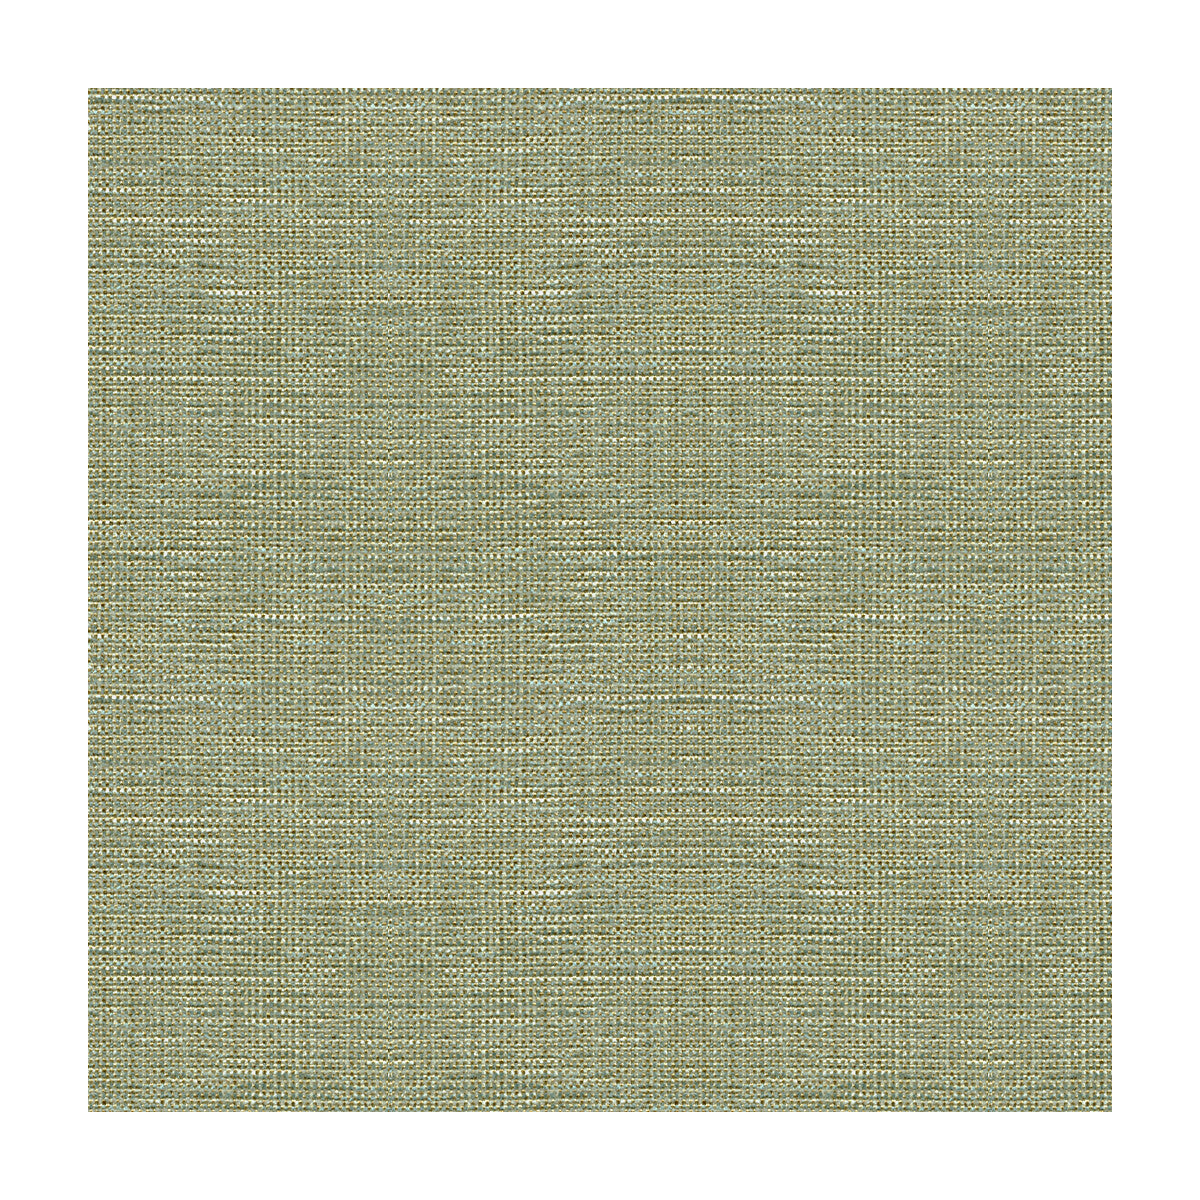 Kravet Smart fabric in 33027-106 color - pattern 33027.106.0 - by Kravet Smart